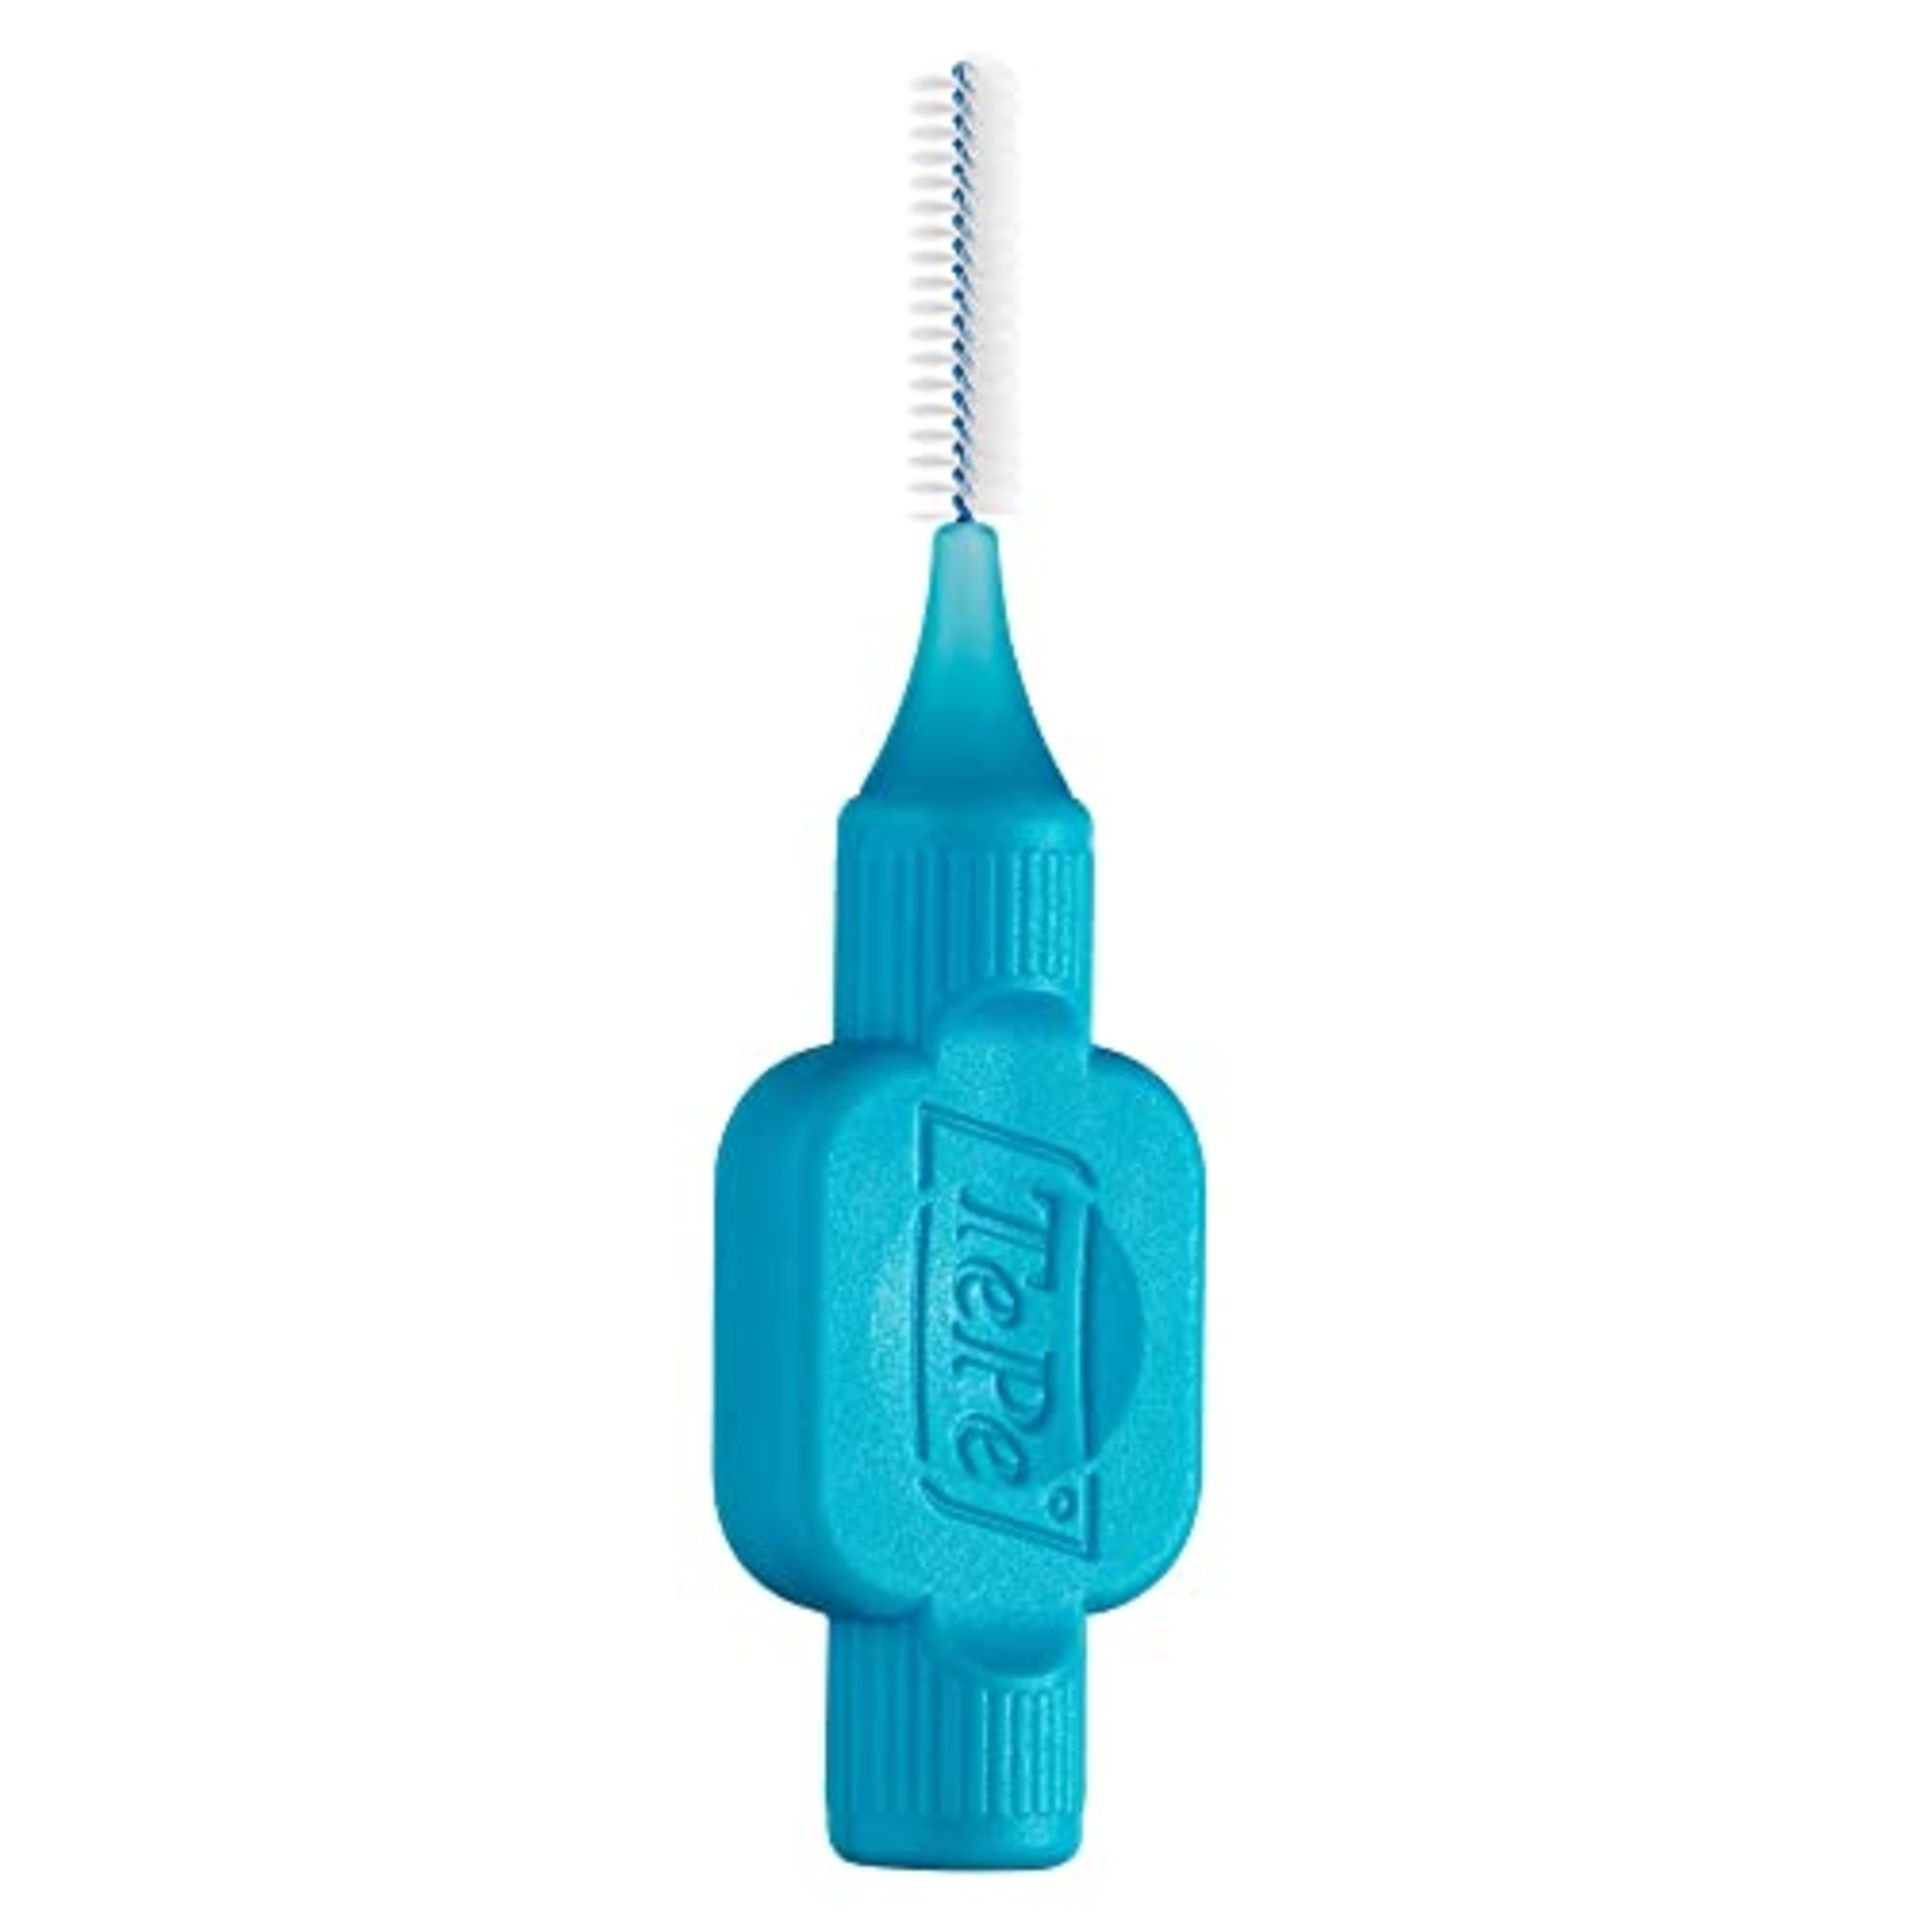 TePe Interdental Brush, Original, Blue, 0.6 mm/ISO 3, 20pcs, plaque removal, efficient